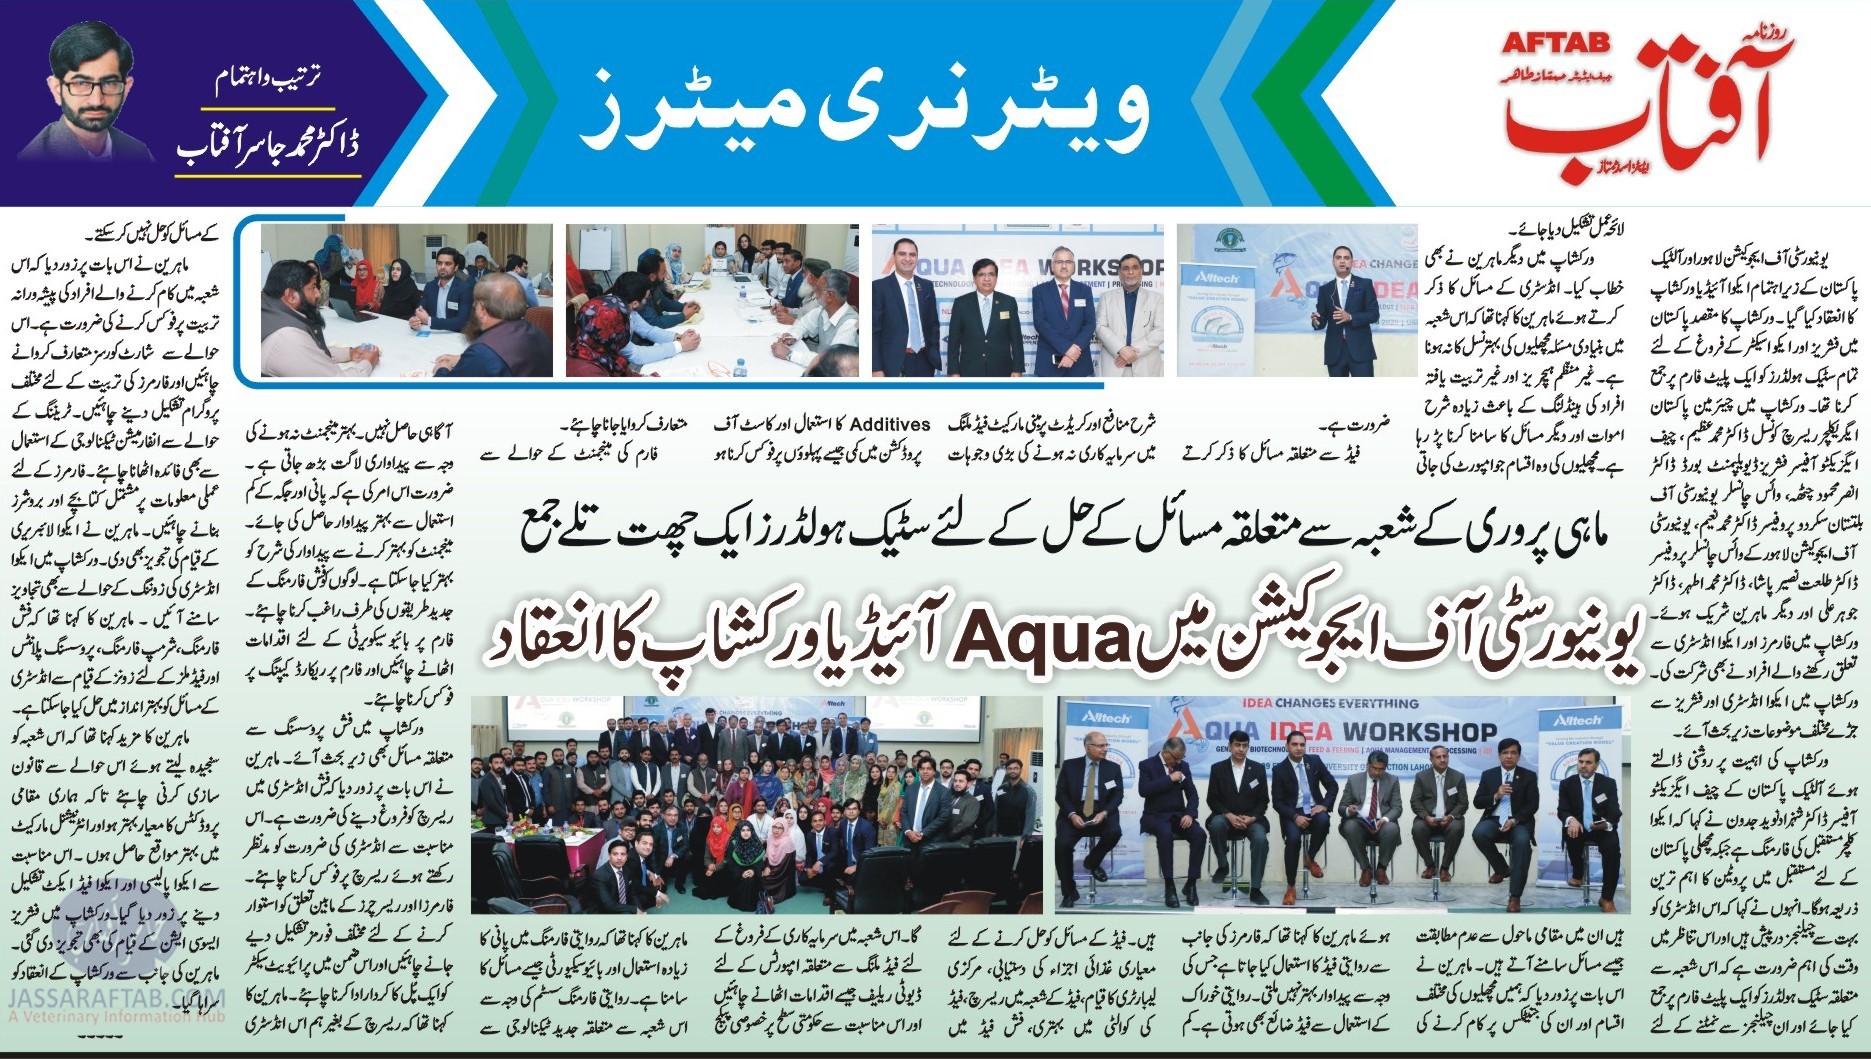 Aqua Idea Workshop held in University of Education 